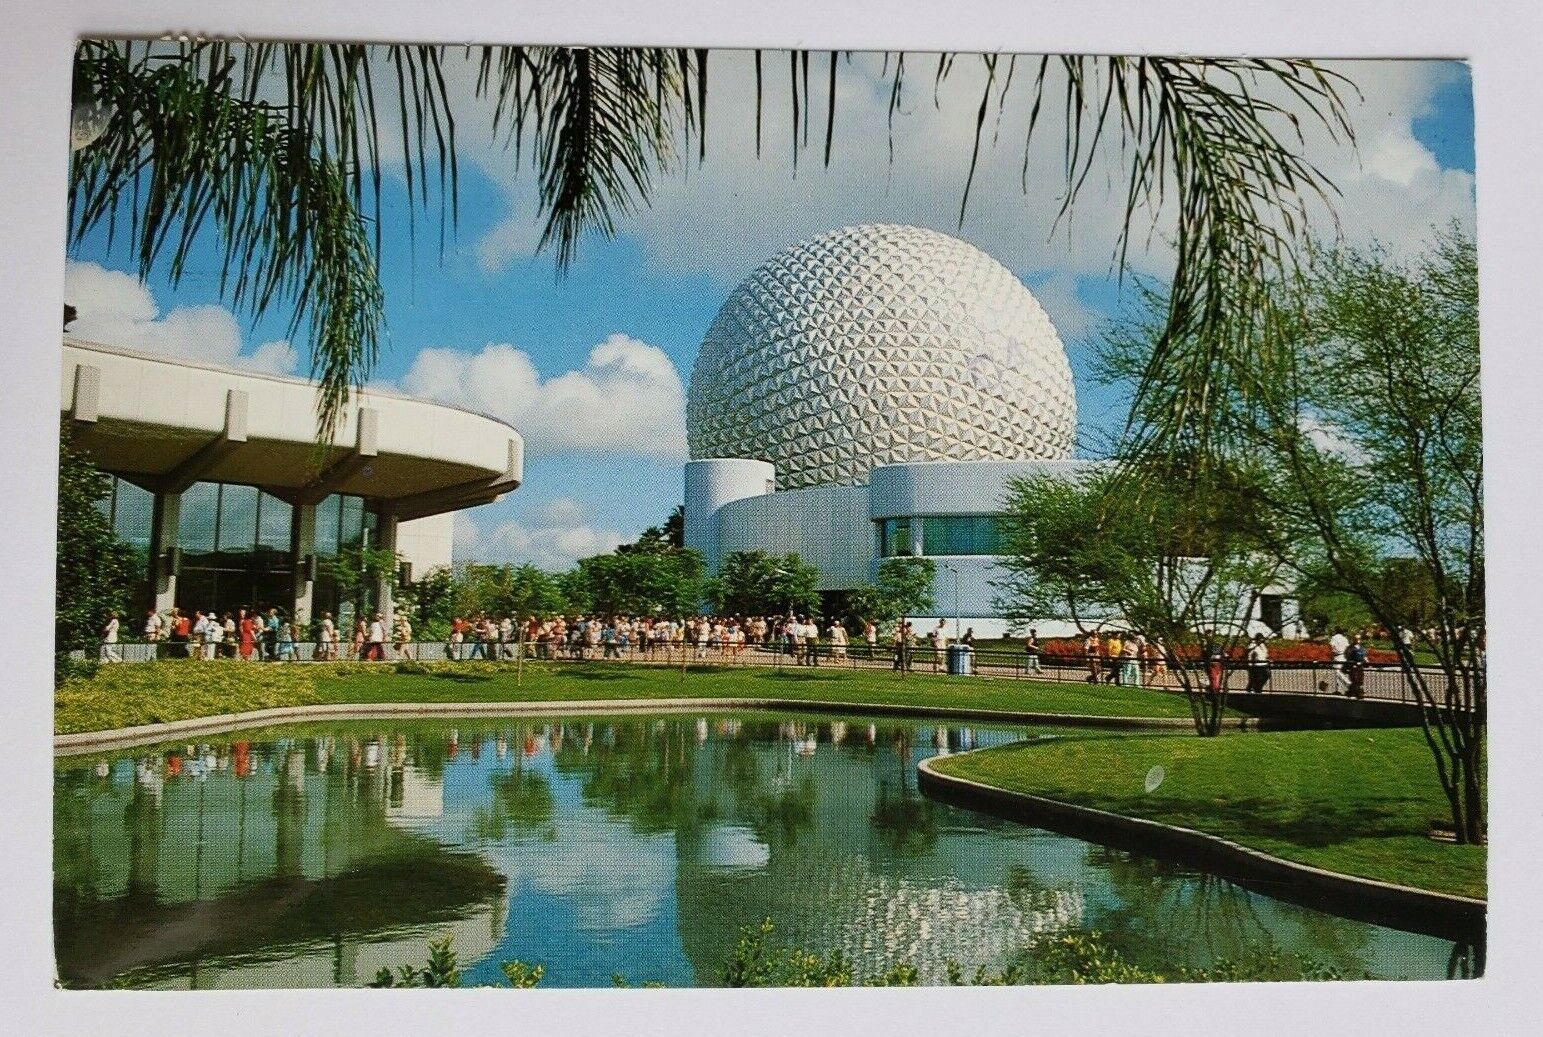 1985 WALT DISNEY WORLD EPCOT CENTER POSTCARD ORLANDO FLORIDA VINTAGE FUTURE PARK - $12.99